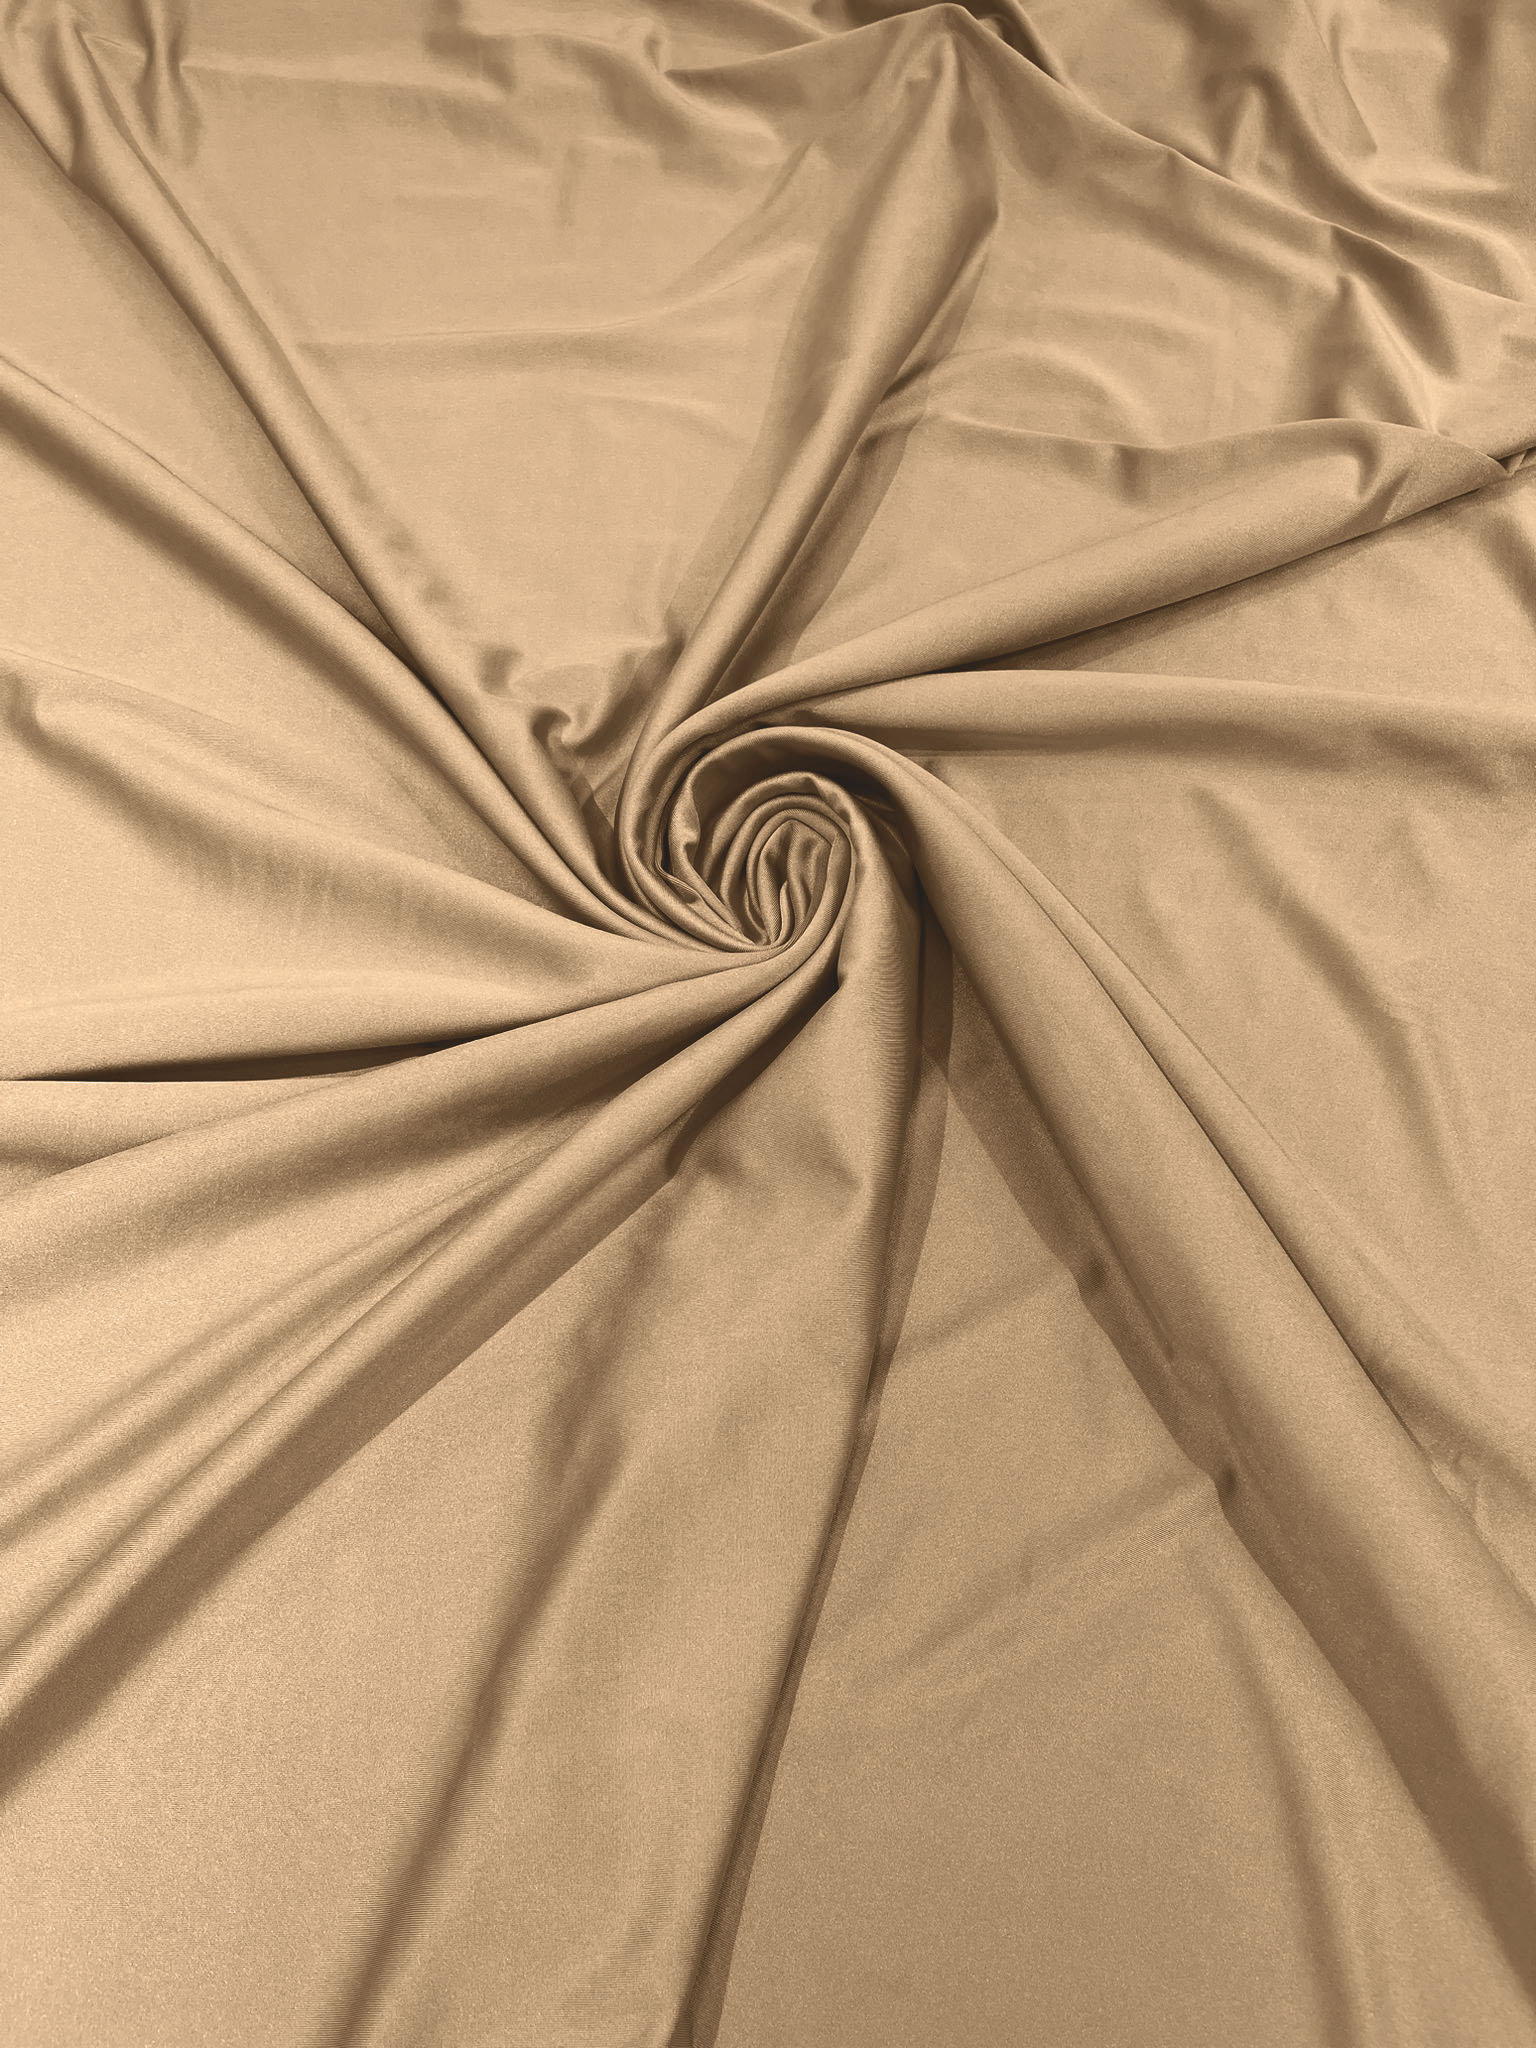 Nylon Spandex Fabric, Matte, Swimwear Fabric, Tricot Milliskin, 60 Wide, 4-Way Stretch, 20% Spandex